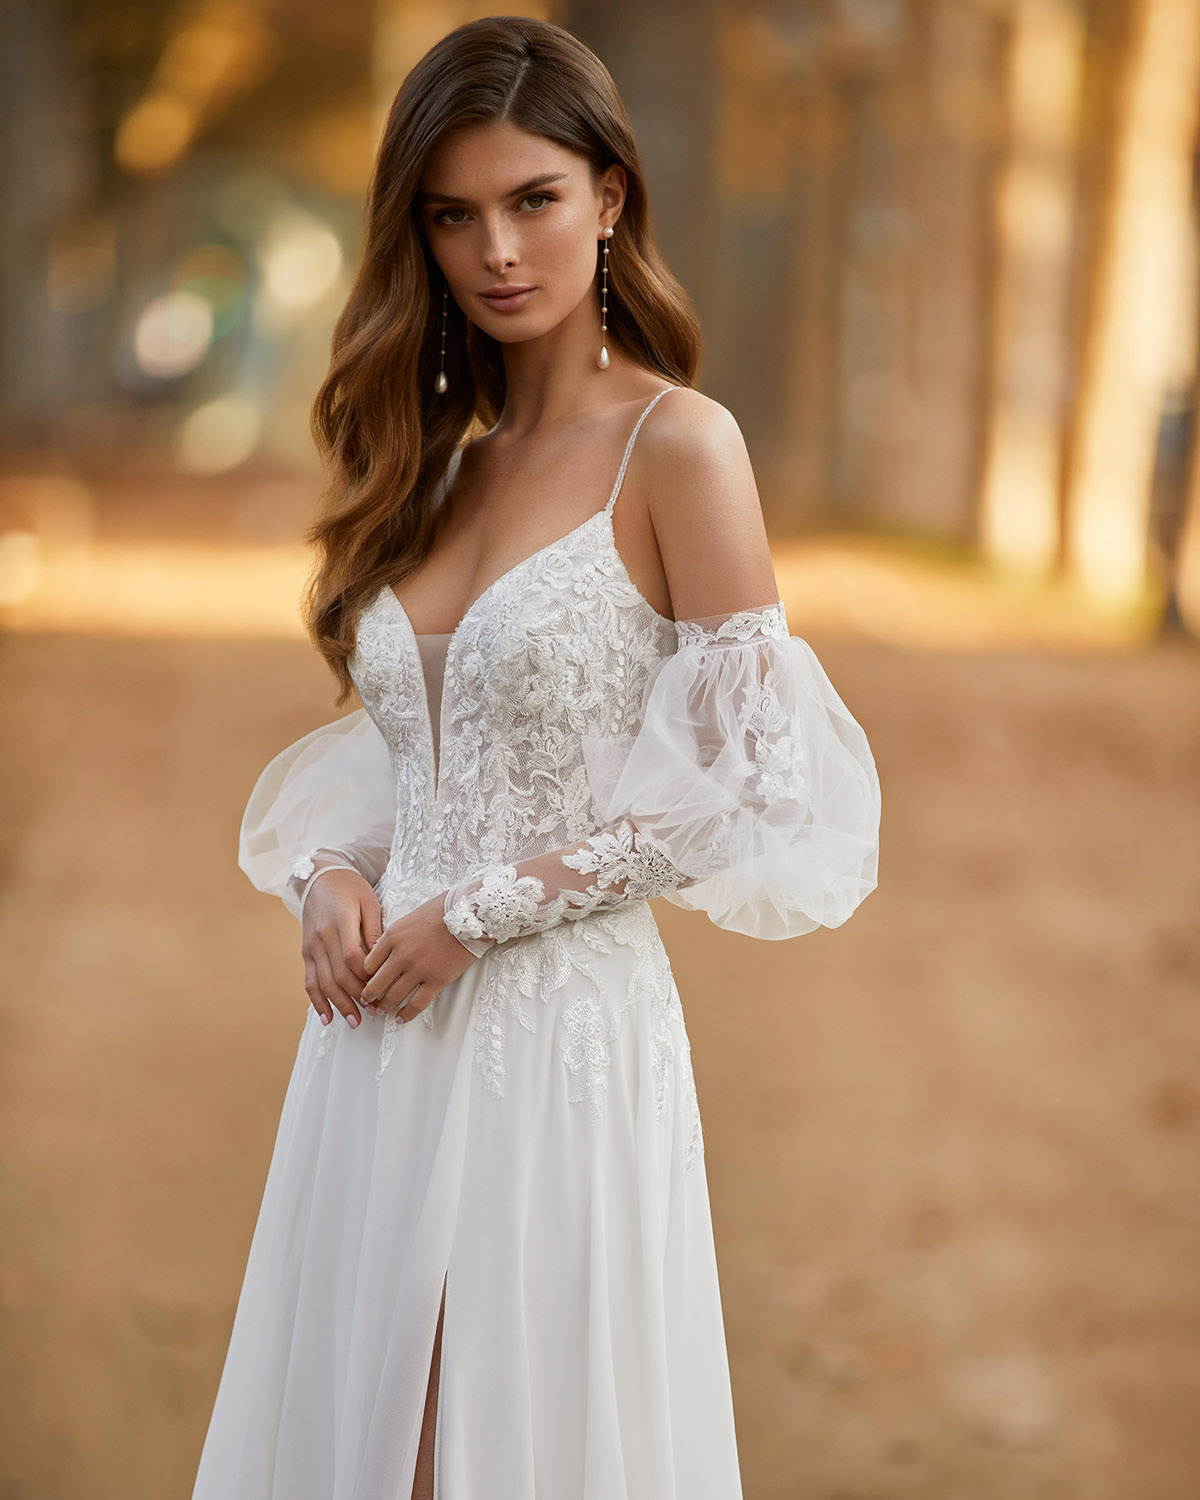 Luna Novias Hochzeitskleid